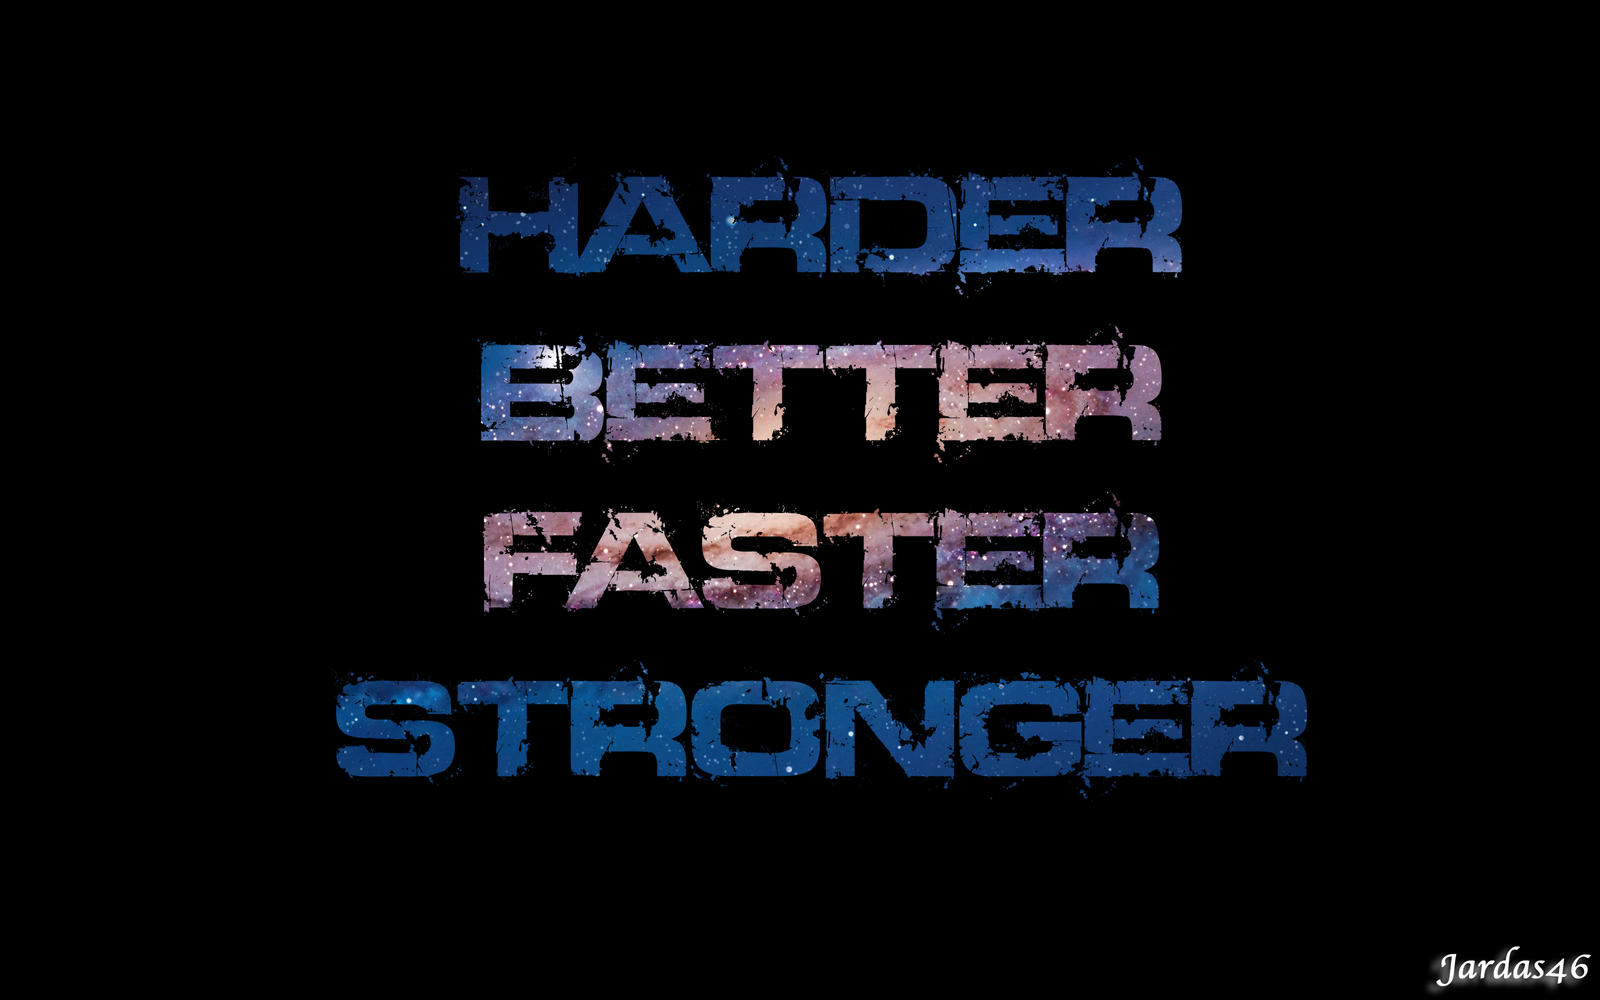 Включи faster and harder. Faster stronger песня ремикс. Better faster. Harder, better, faster, stronger Daft Punk. Хардер беттер Фастер стронгер.